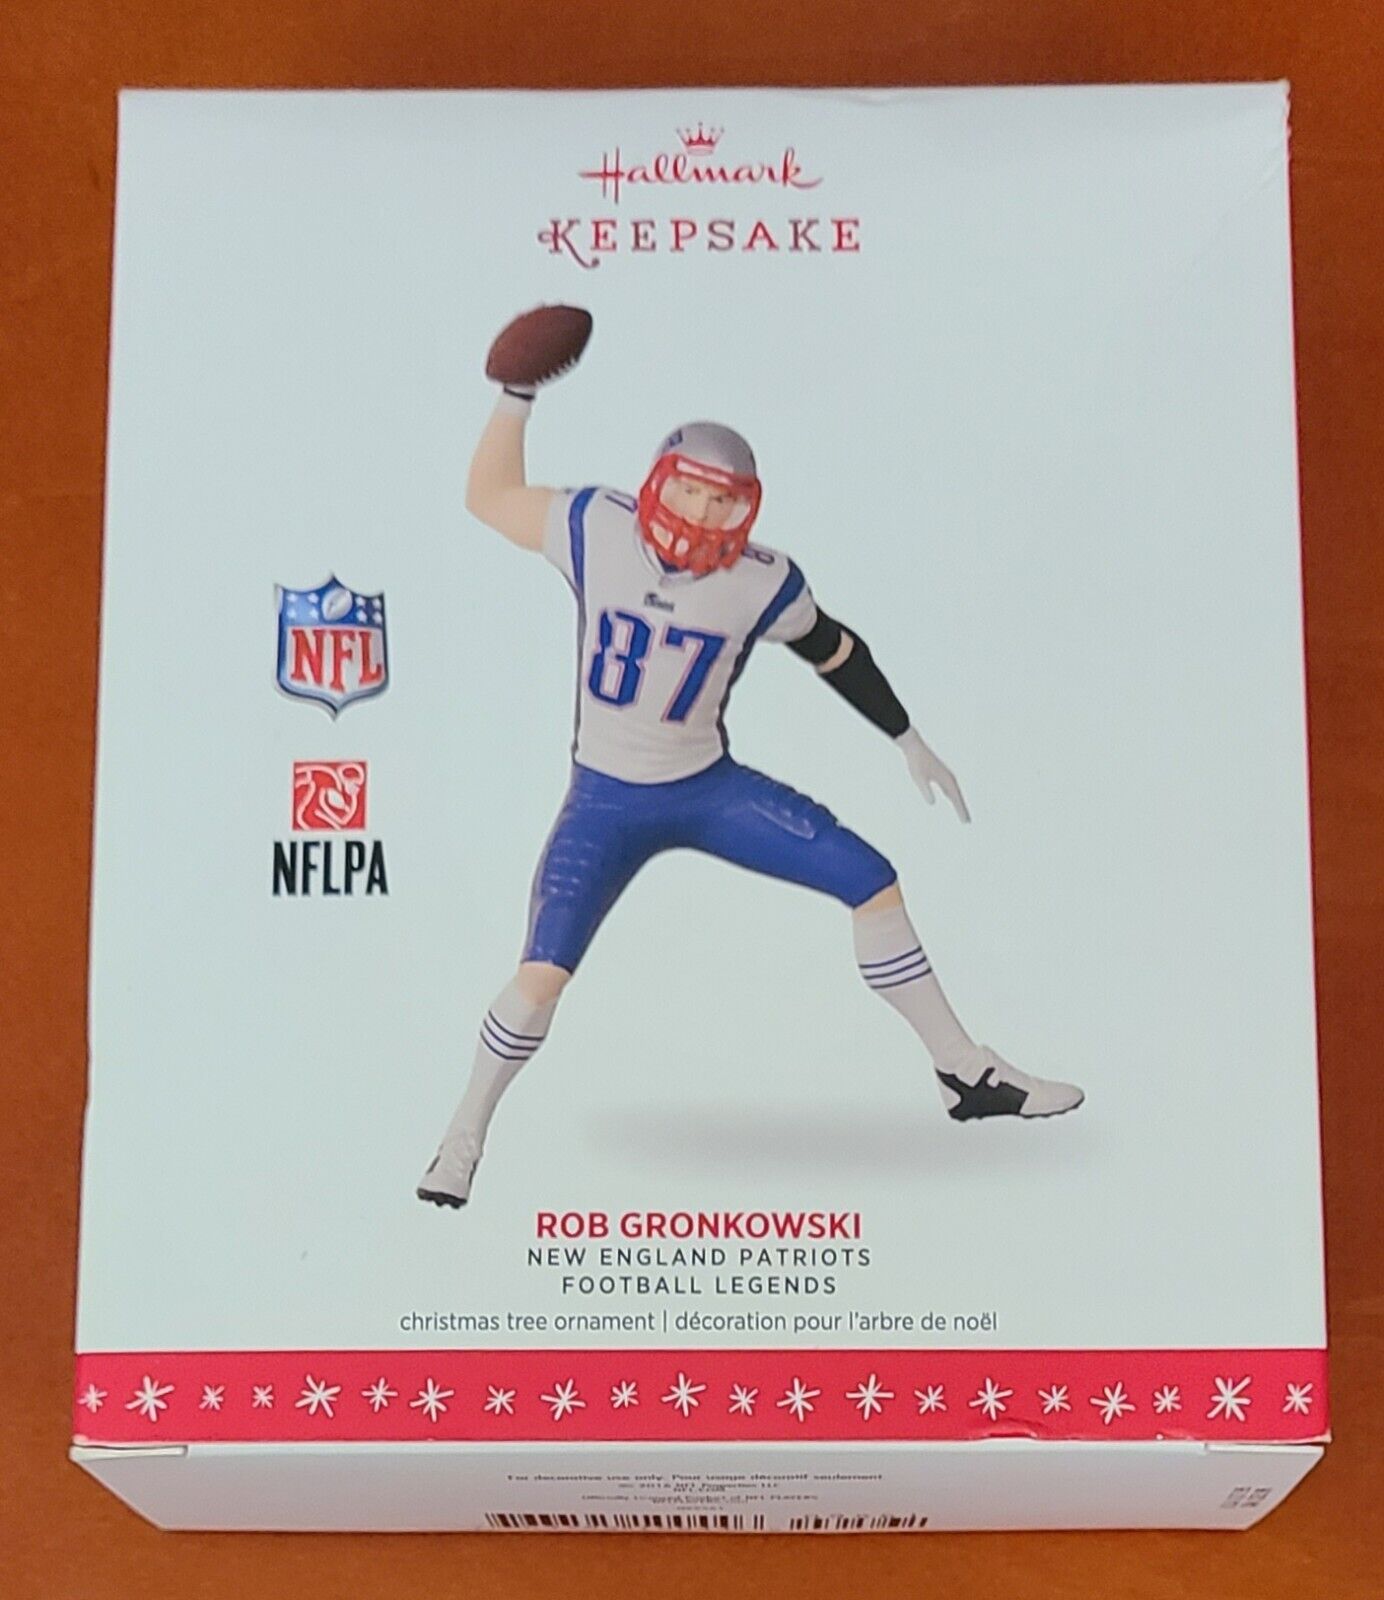 2016 Rob Gronkowski Hallmark Keepsake Ornament New England Patriots